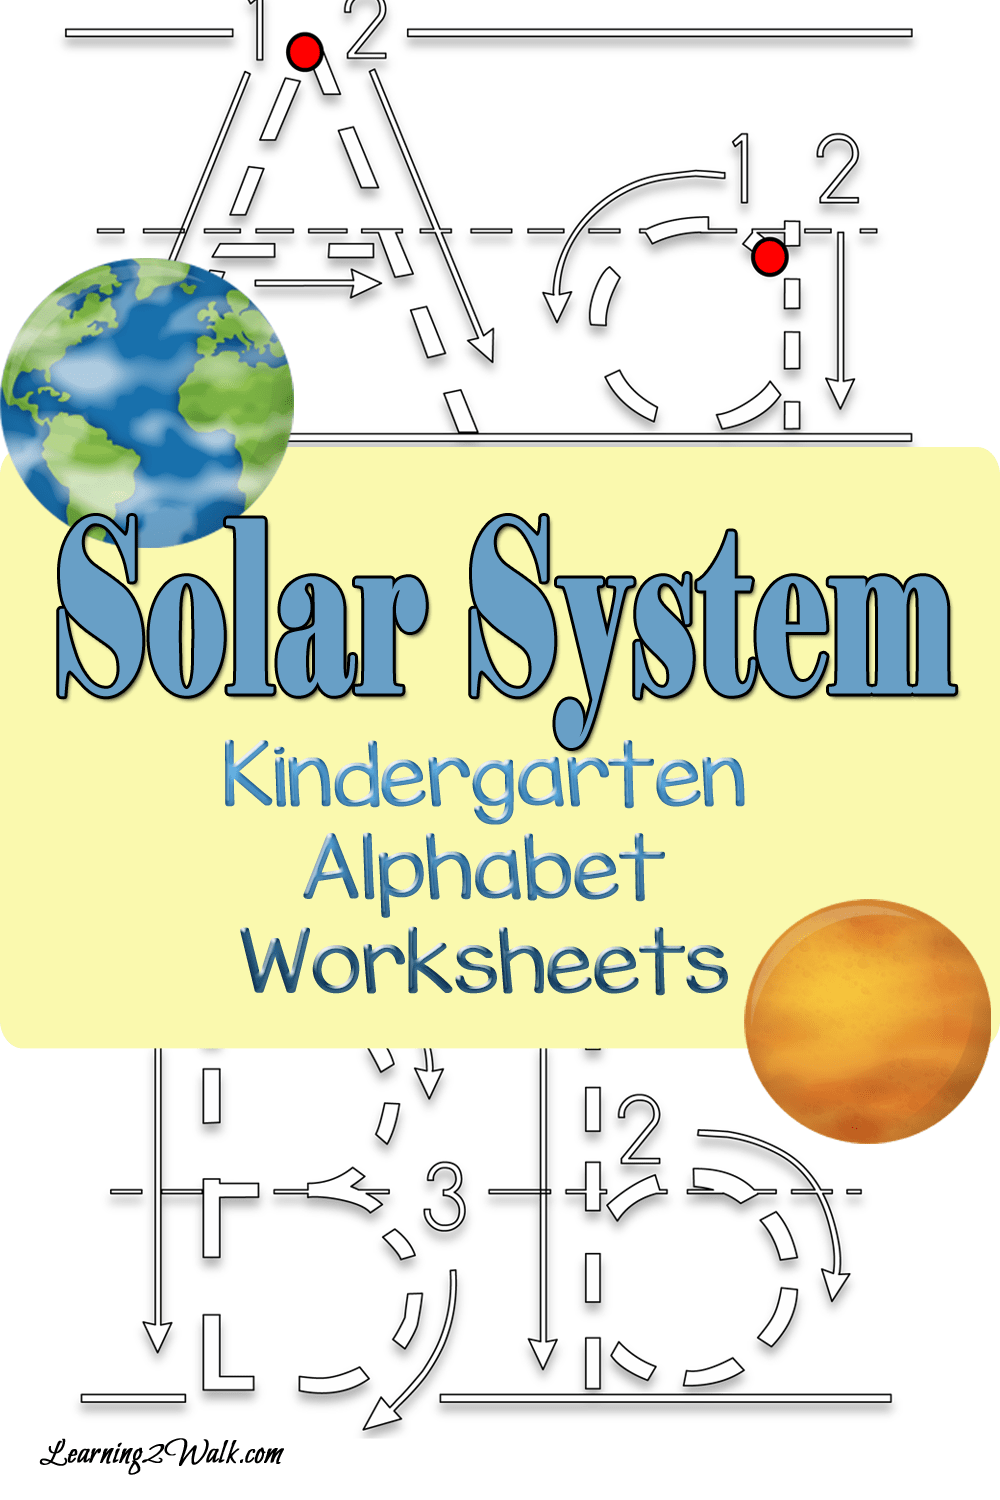 Solar System Alphabet Kindergarten worksheets